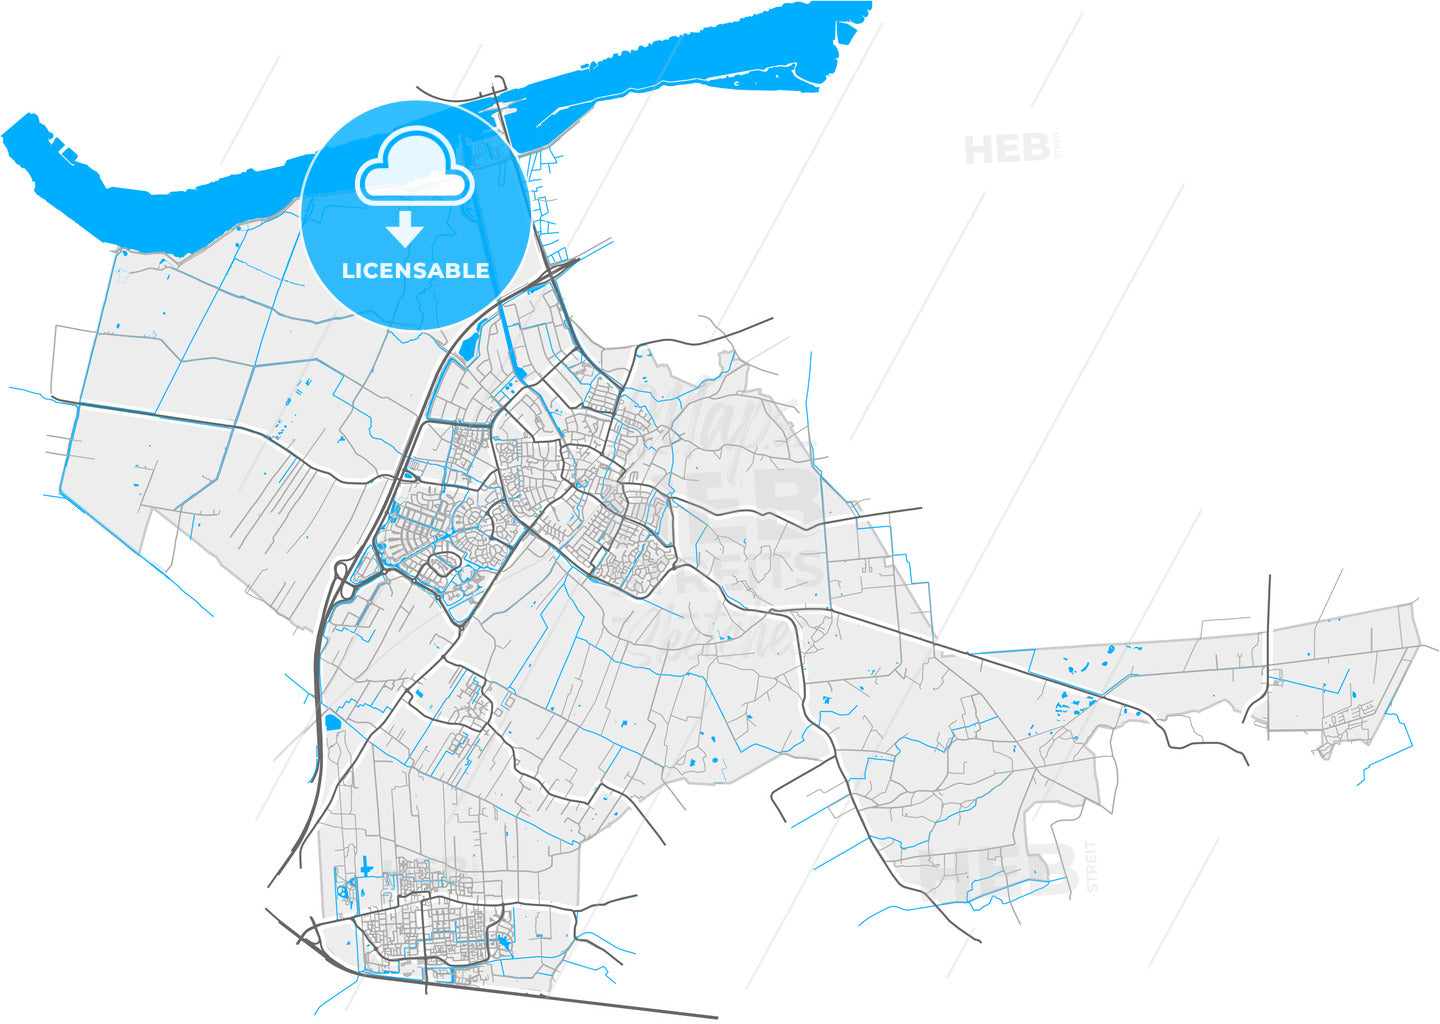 Nijkerk, Gelderland, Netherlands, high quality vector map